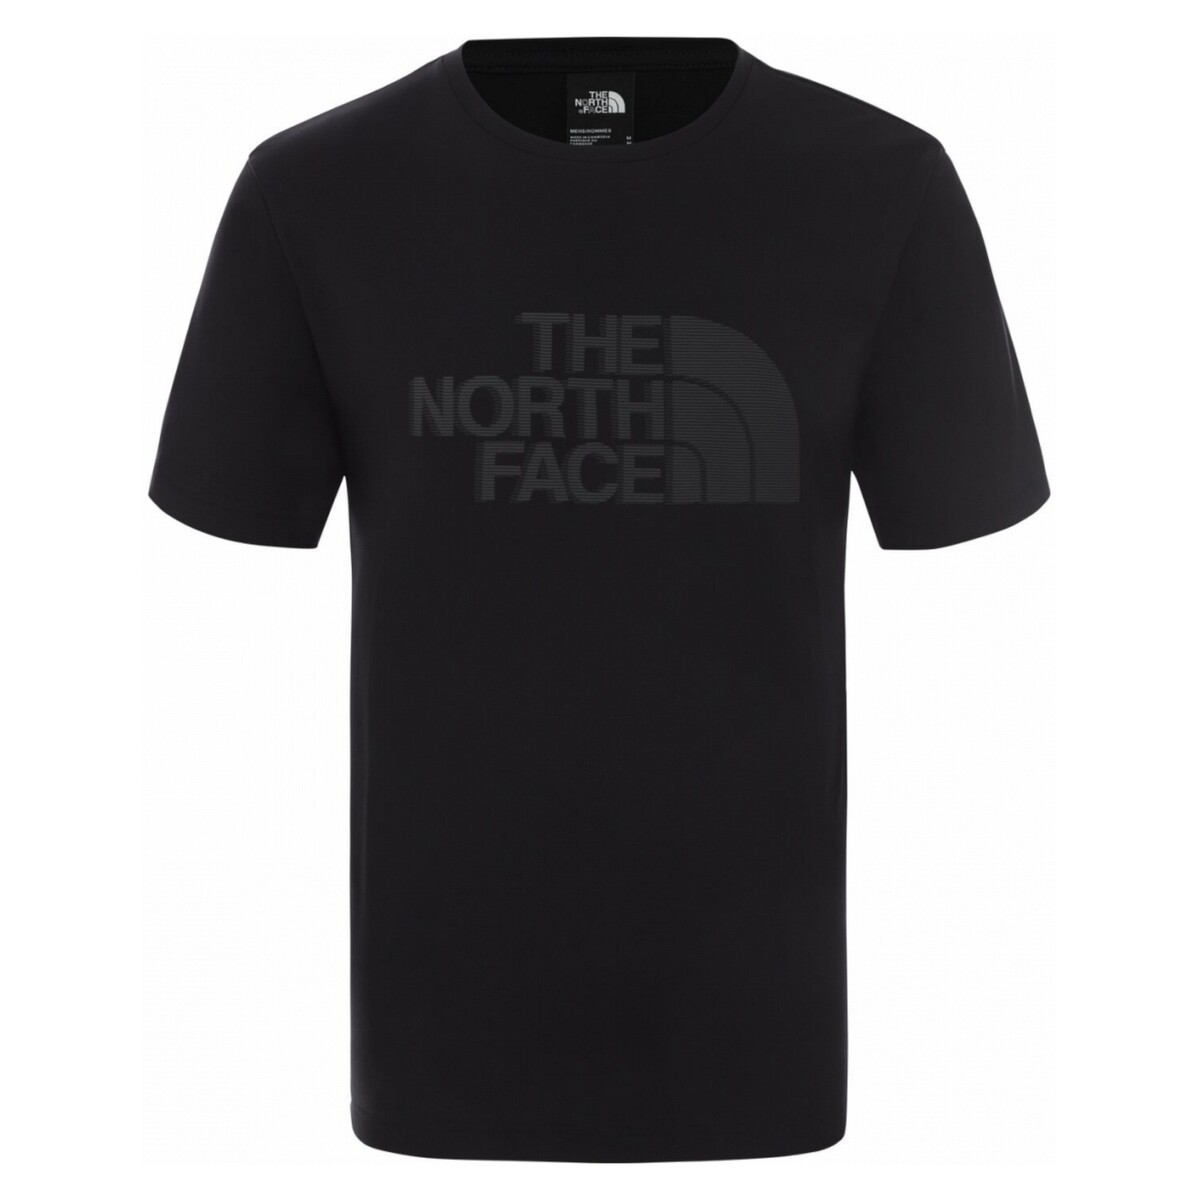 textil Hombre Camisetas manga corta The North Face NF0A4962 Negro